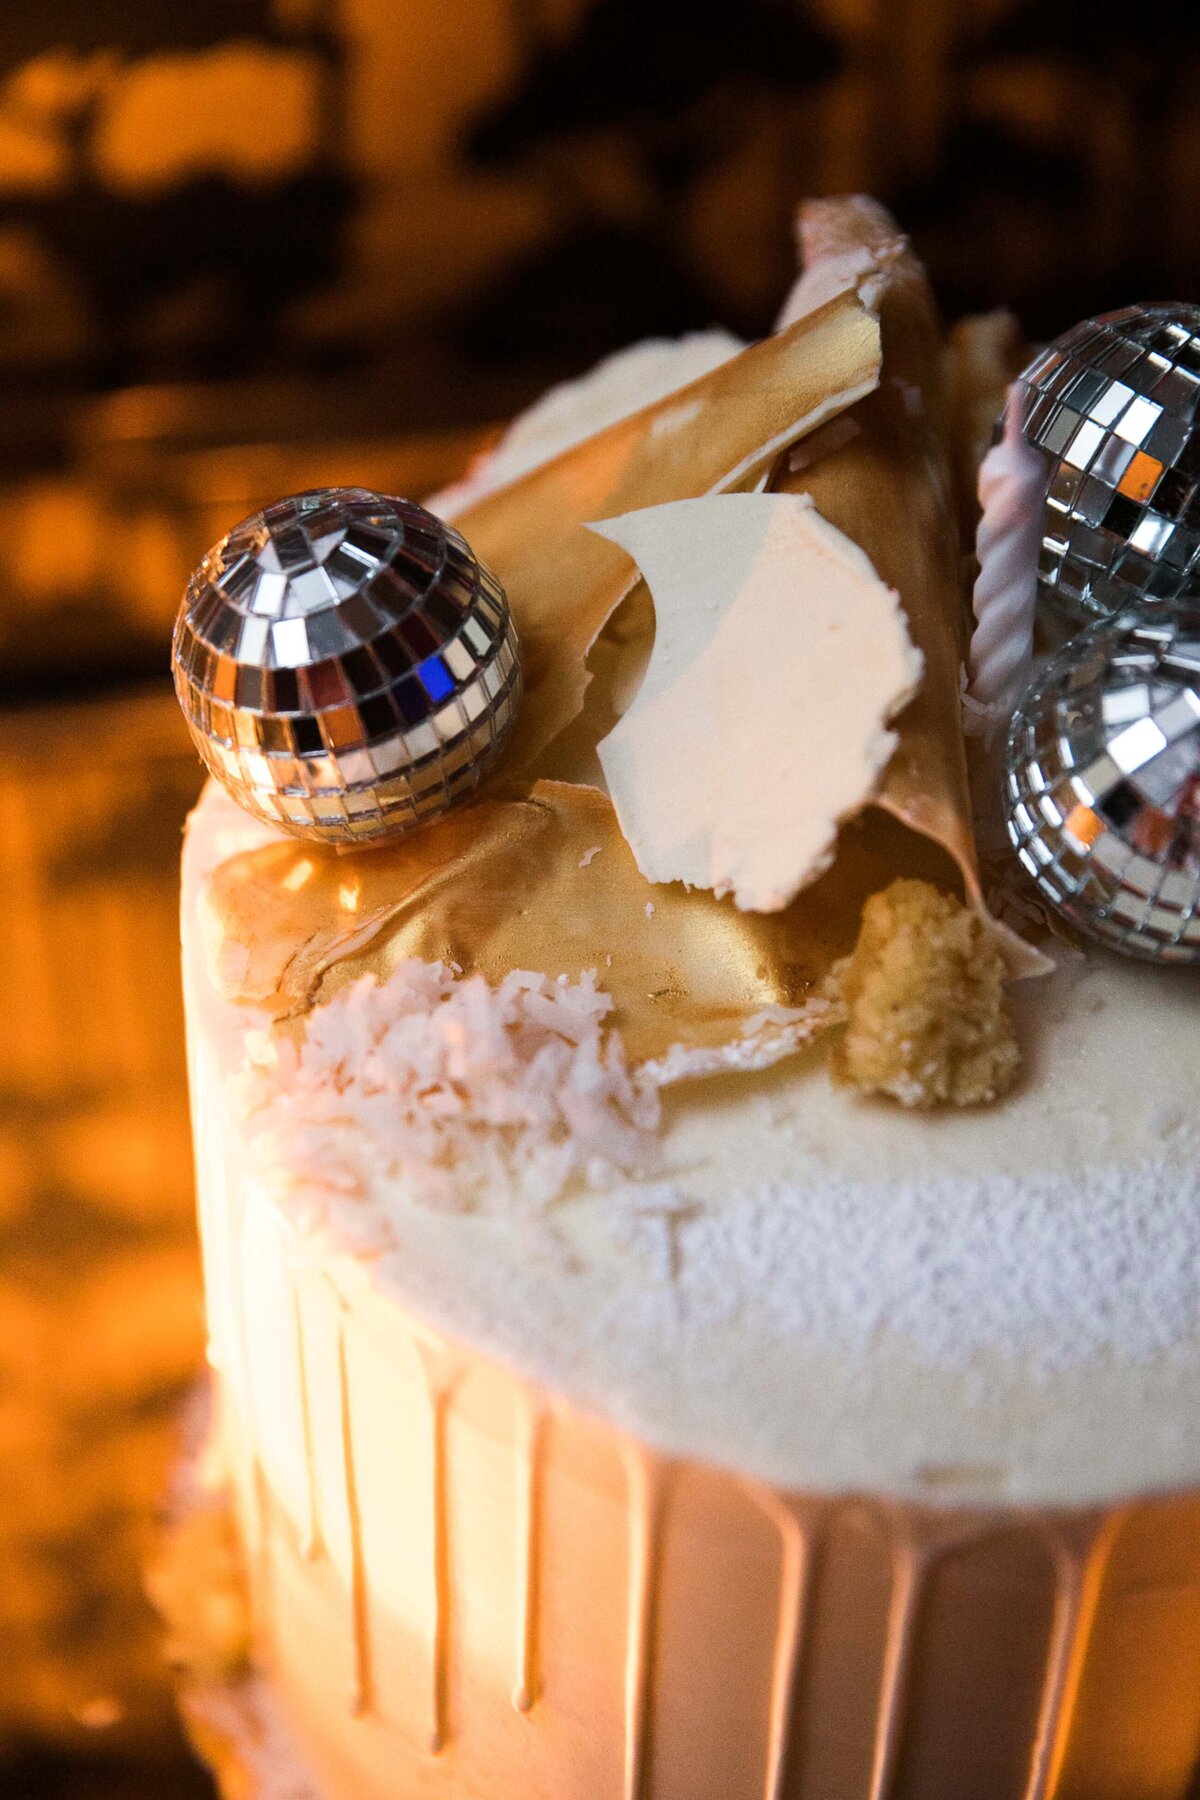 Disco Balls on Birthday Cake